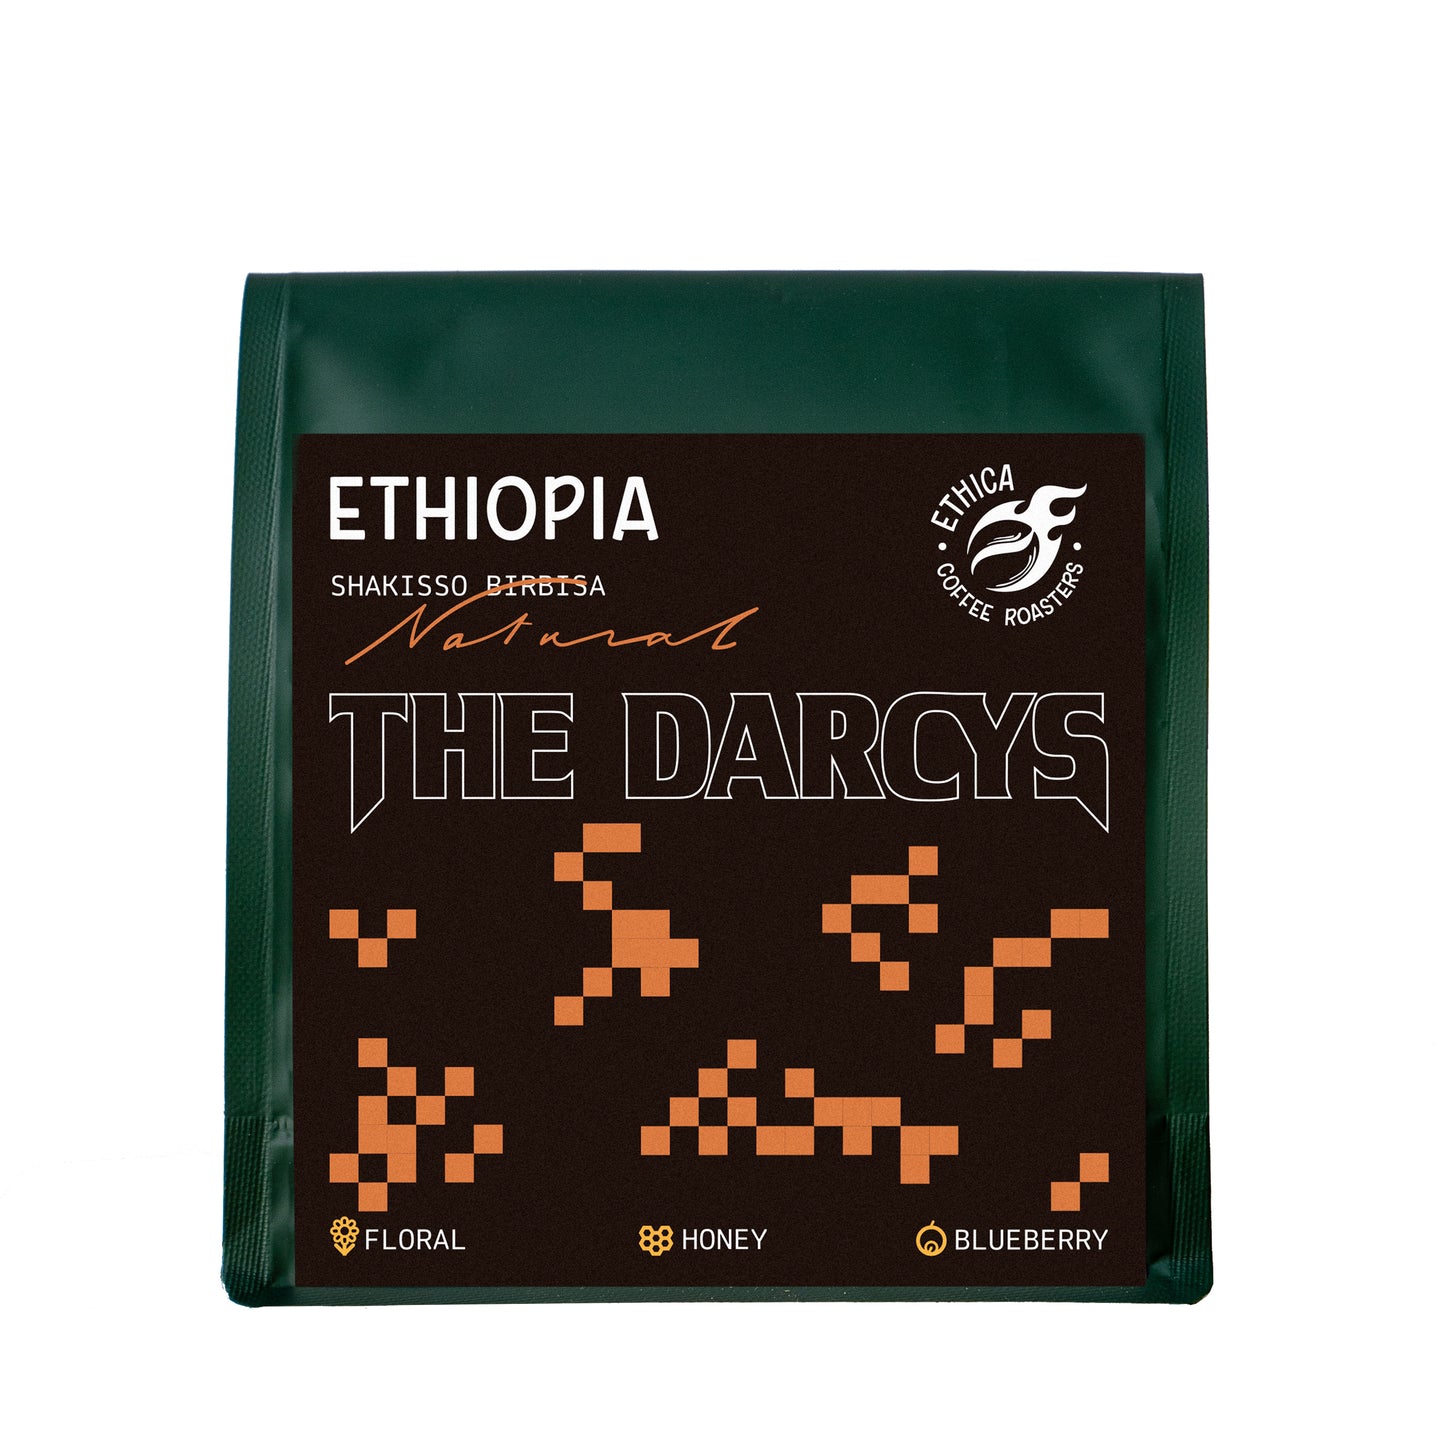 The Darcys x Ethica Coffee Roasters Ethiopia Shakisso Birbisa Natural Coffee